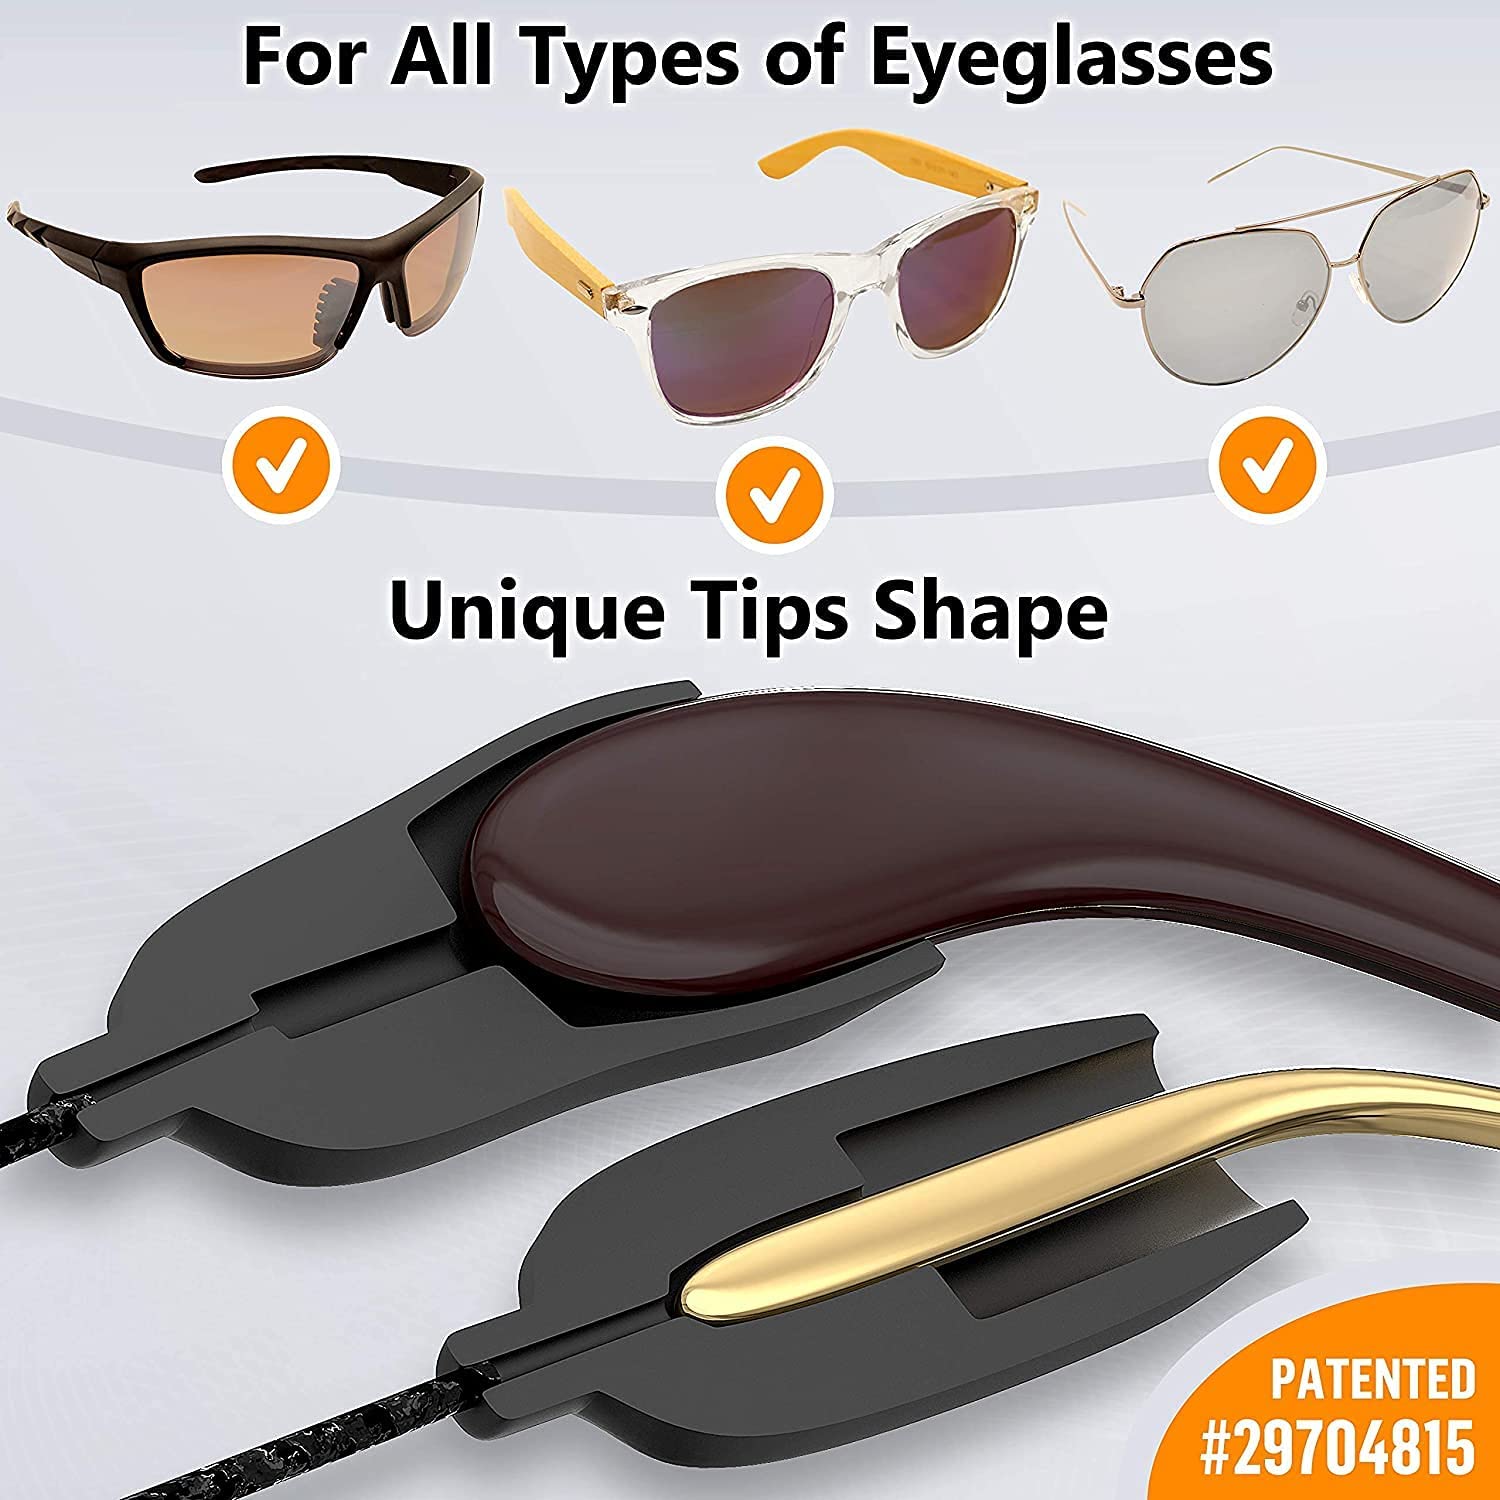 Wired Eyeglass Straps for men